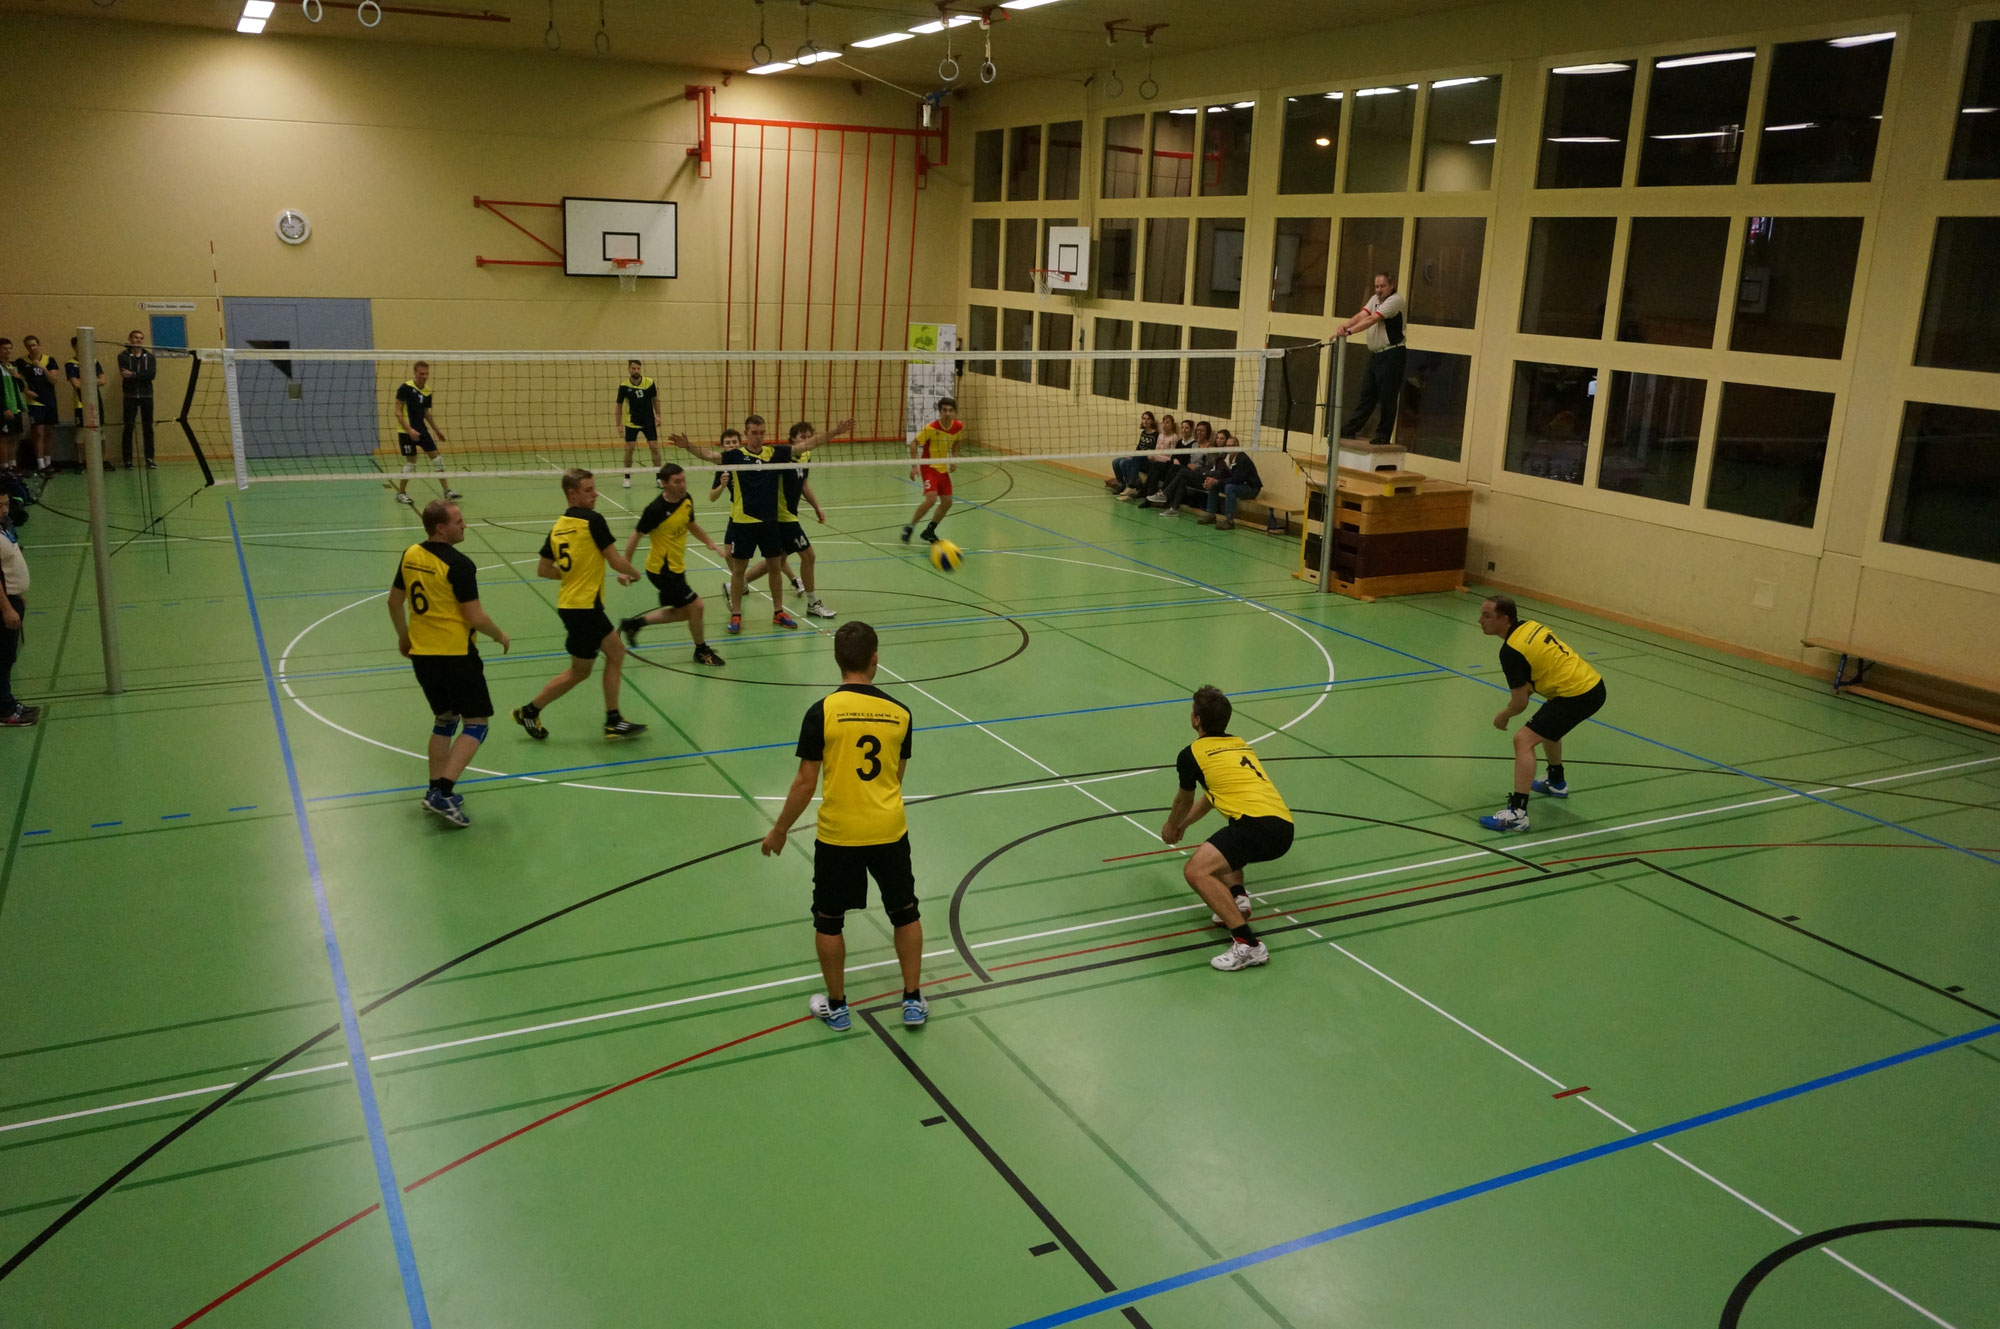 (c) Volley-sempach.ch